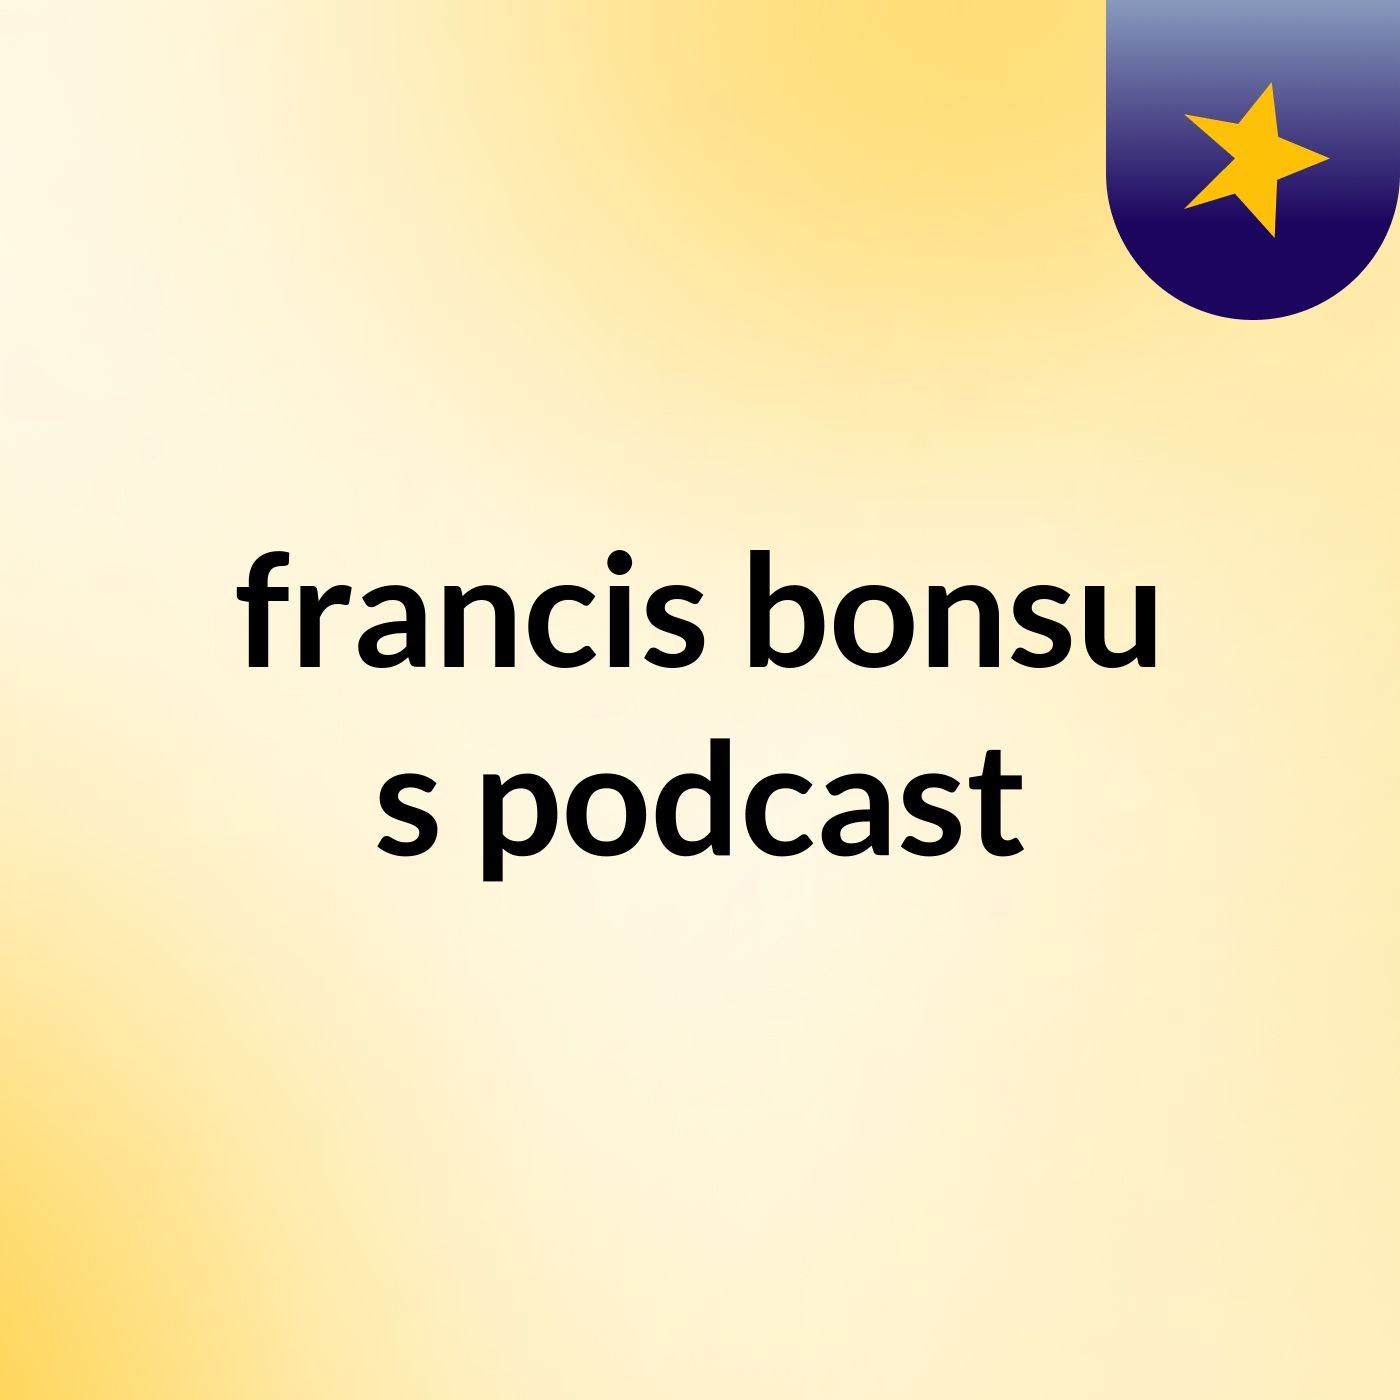 francis bonsu's podcast